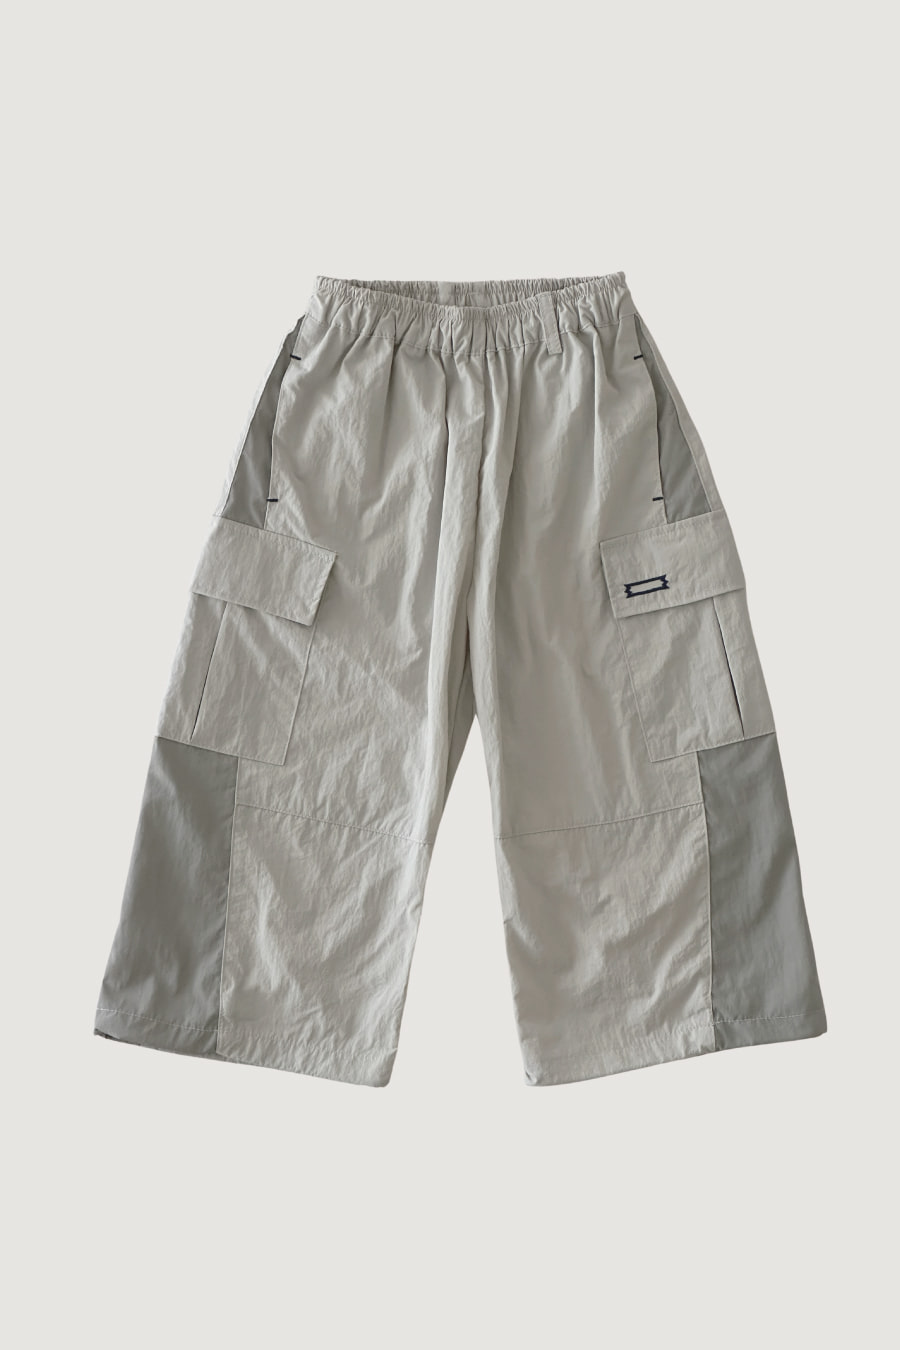 Nats Wind wide Cargo pants (Gray)